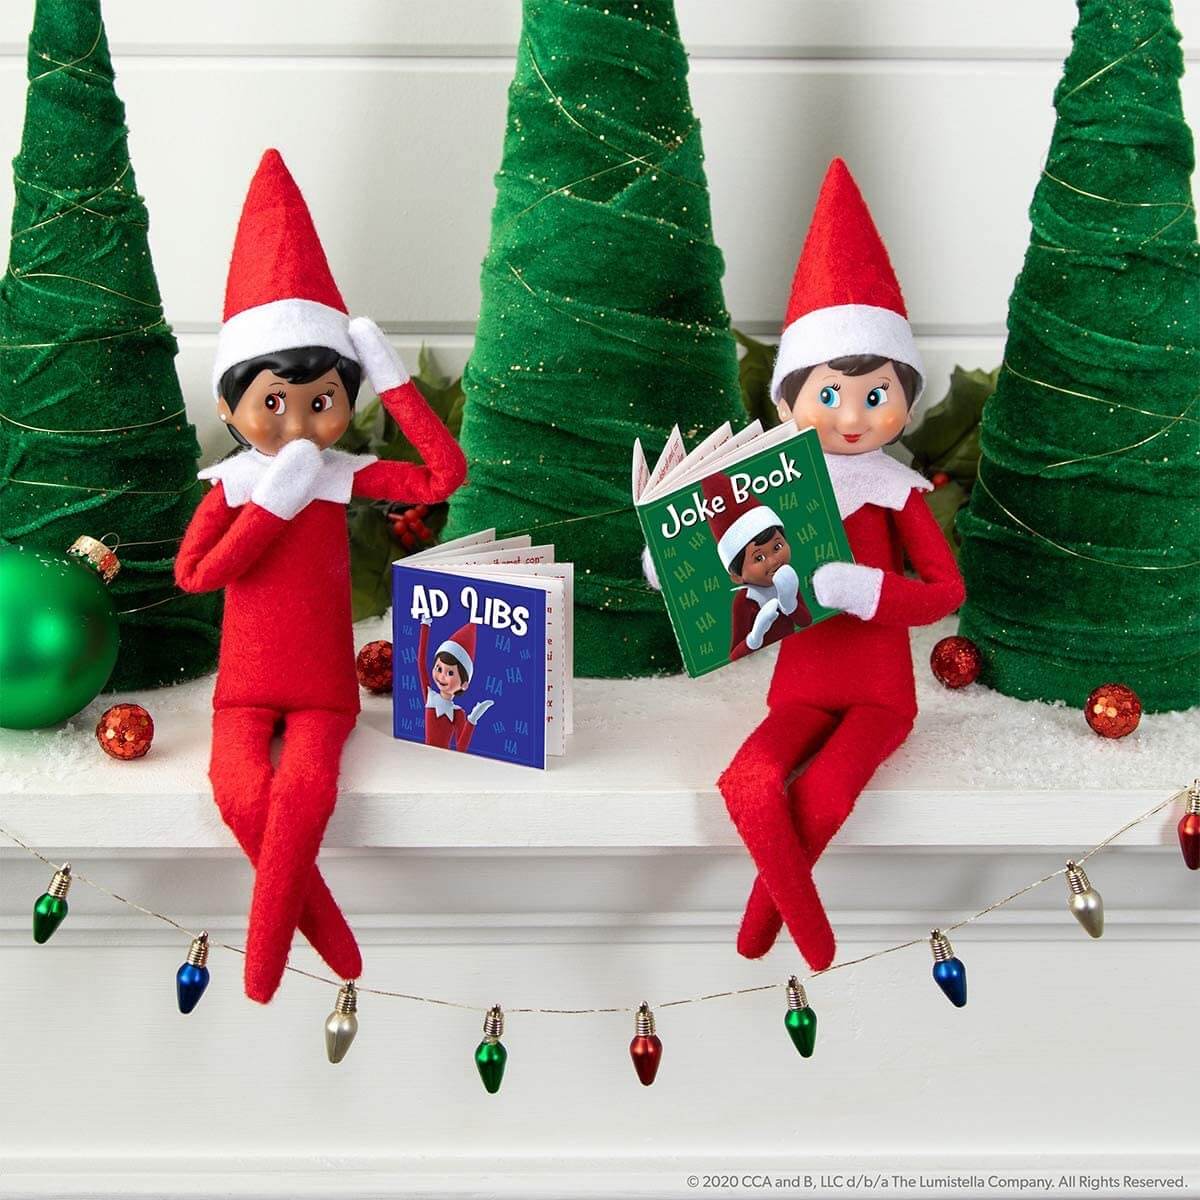 15 Quick and Funny Elf on the Shelf Ideas - Sevenedges